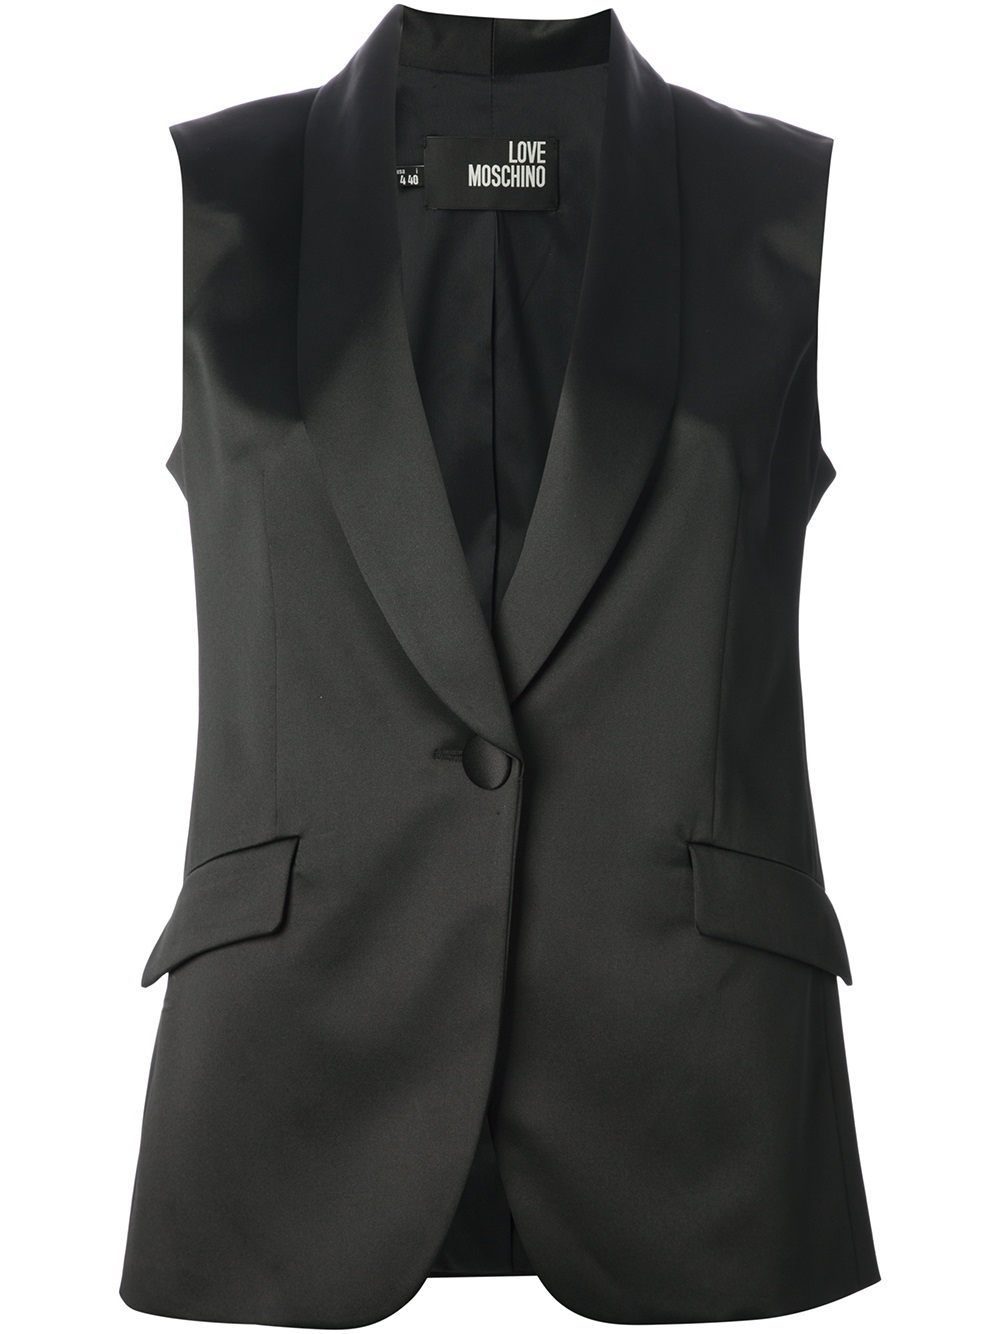 Love Moschino Sleeveless Tuxedo Jacket in Black - Lyst